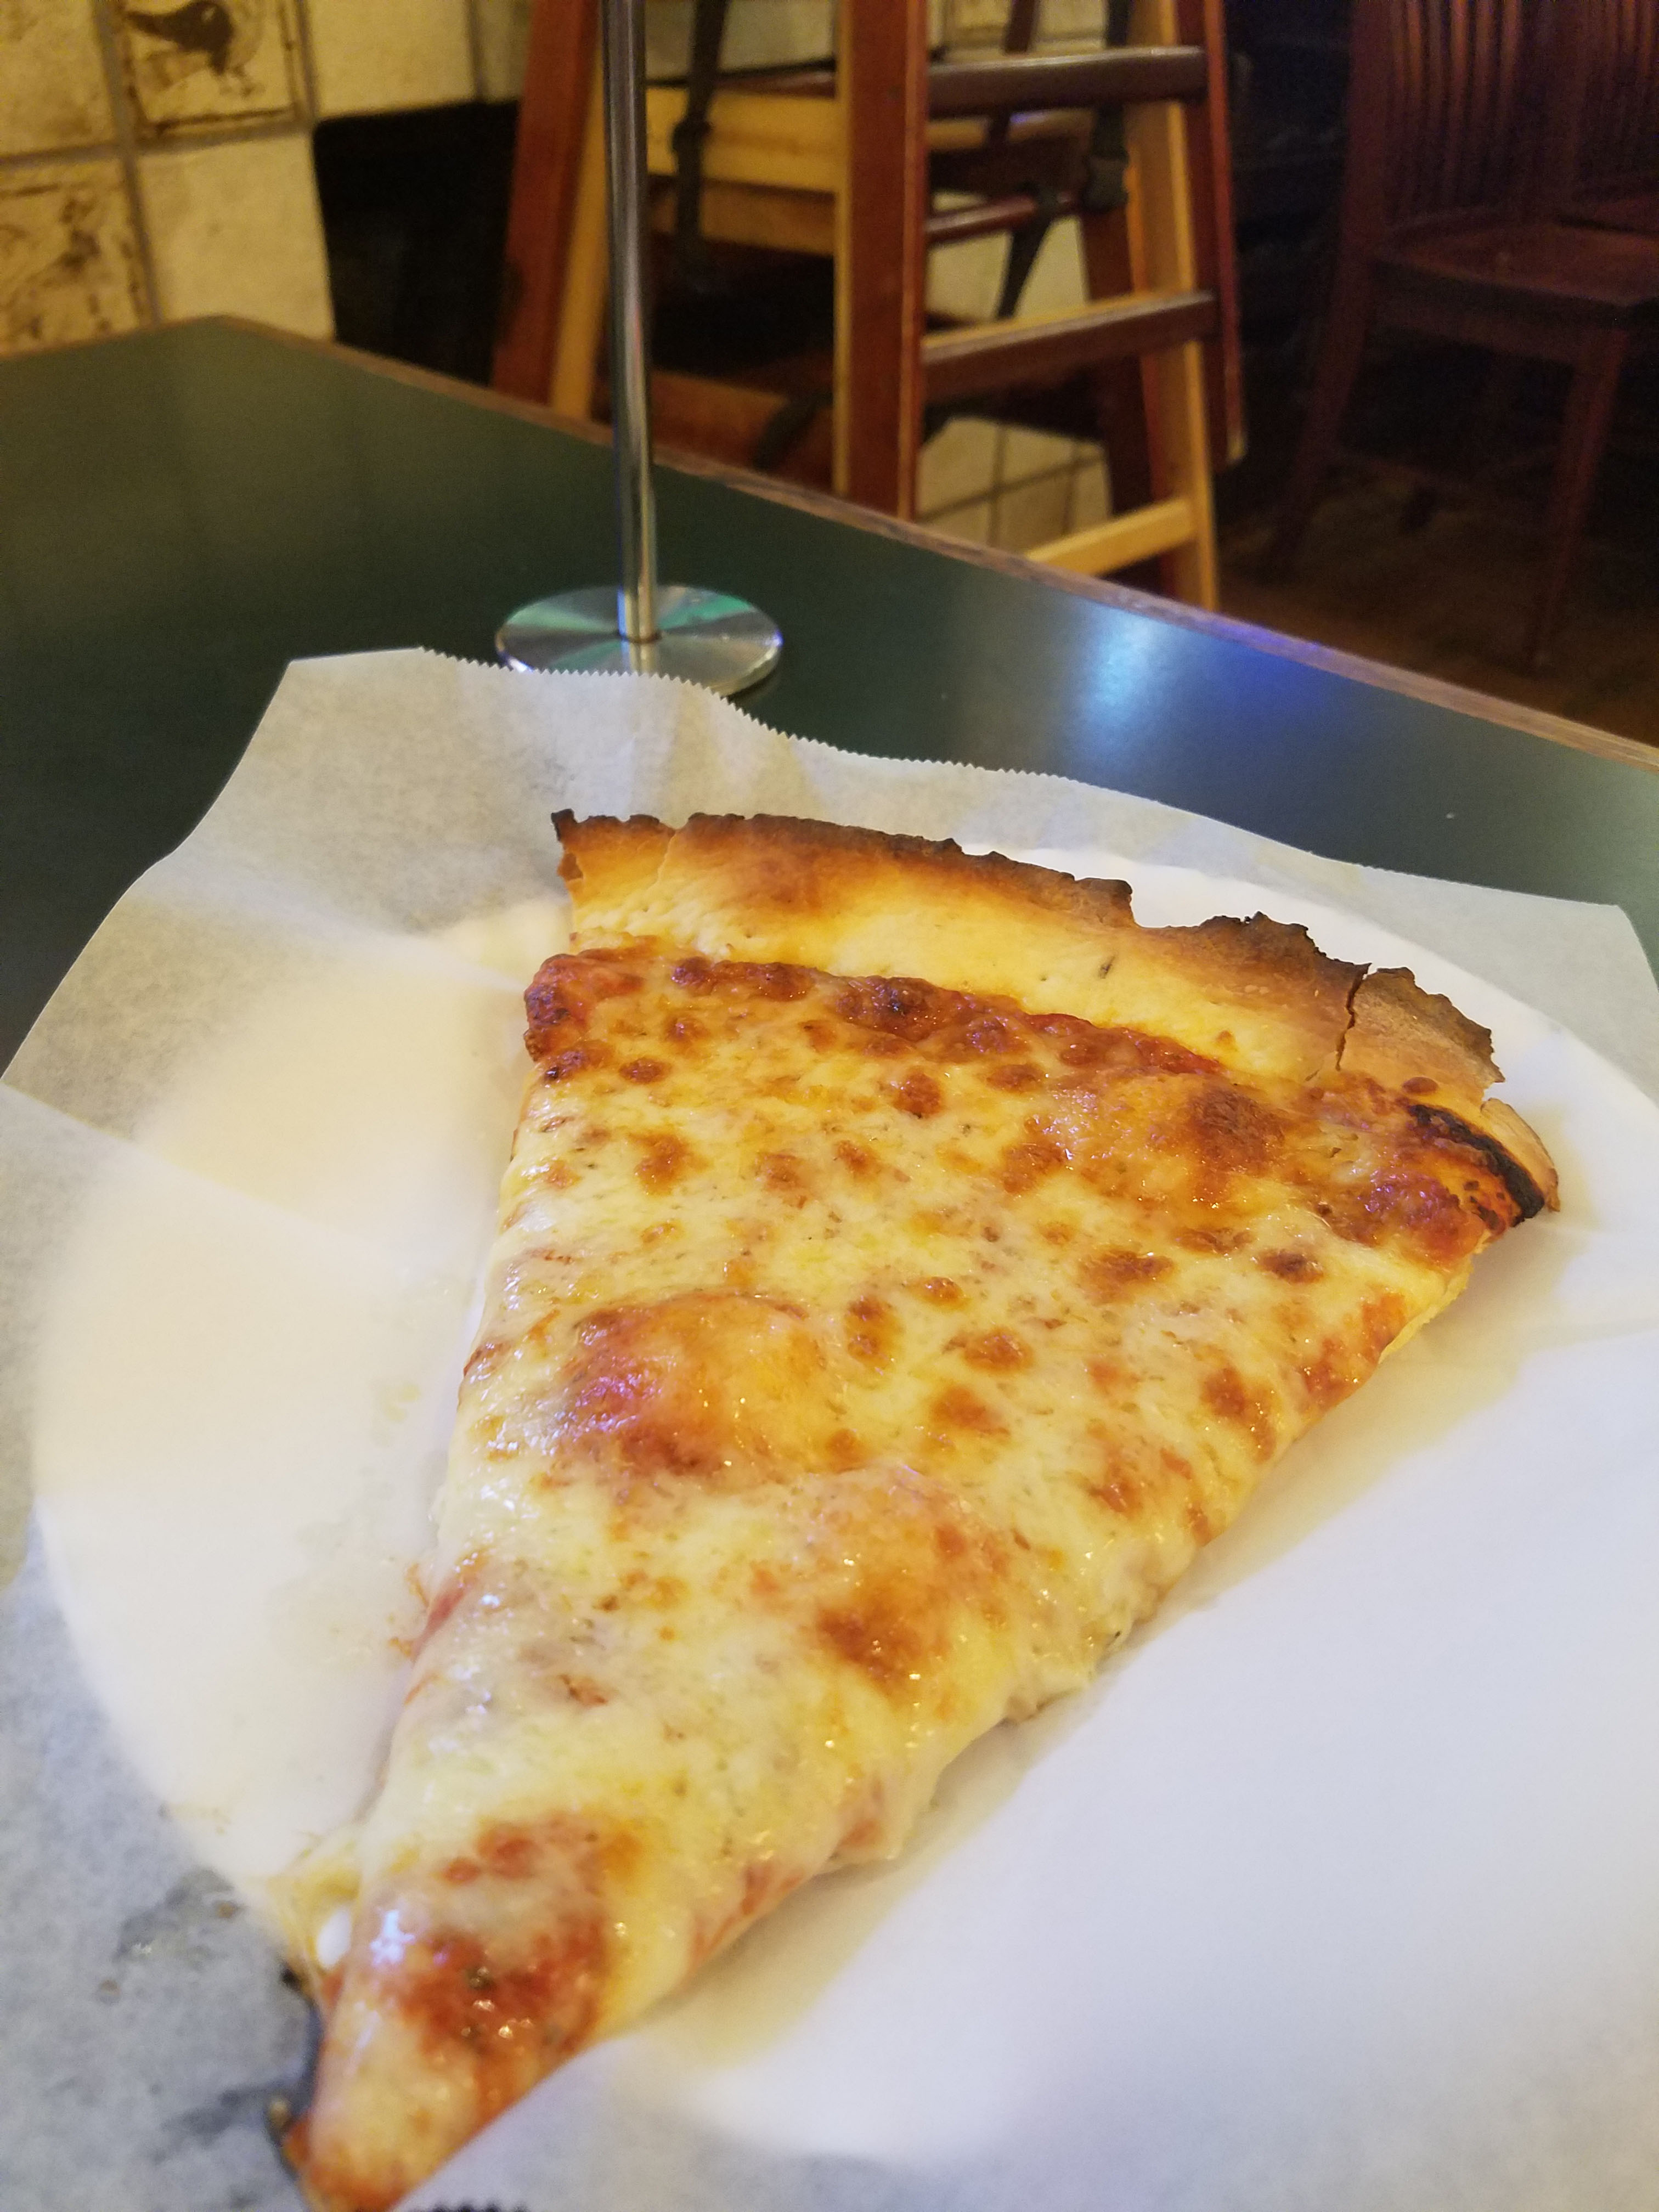  Lefty’s Chicago Pizzeria Review